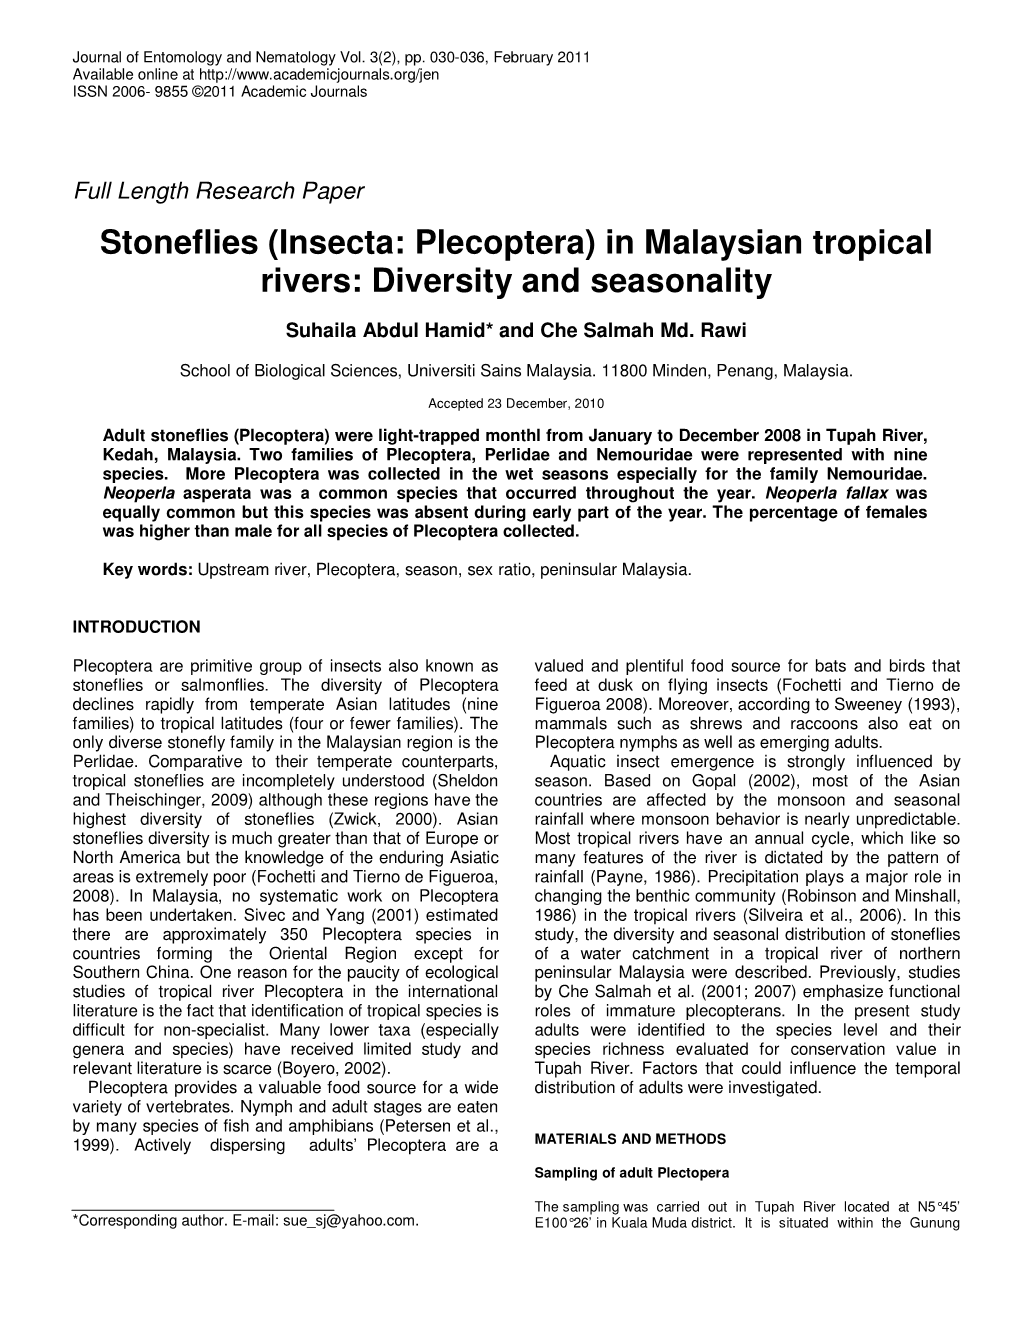 Stoneflies (Insecta: Plecoptera) in Malaysian Tropical Rivers: Diversity and Seasonality